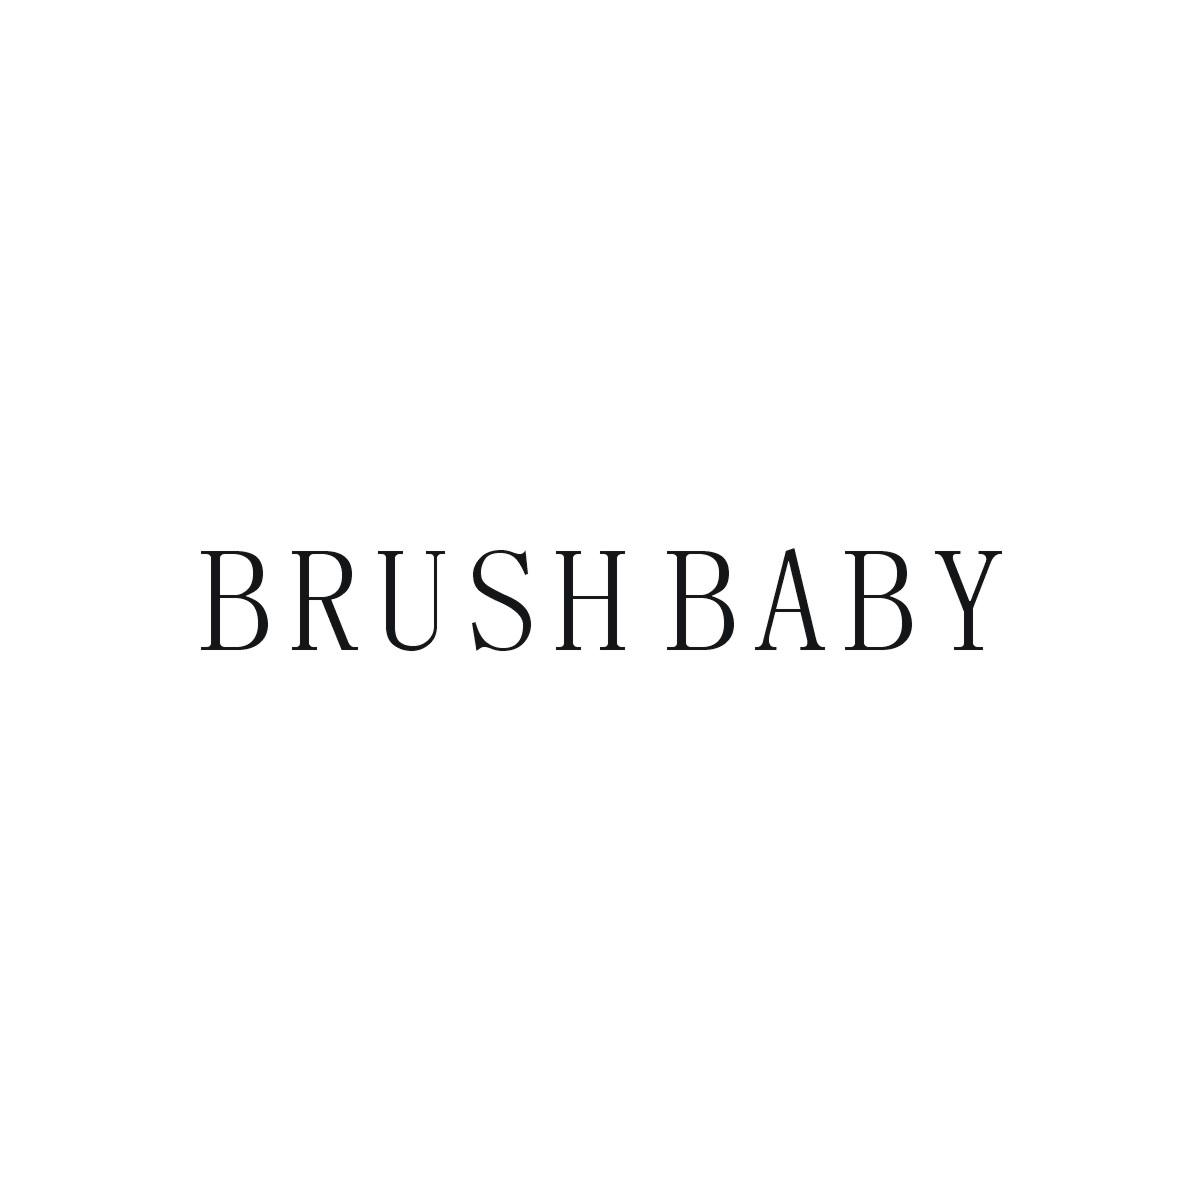 21类-厨具瓷器BRUSH BABY商标转让